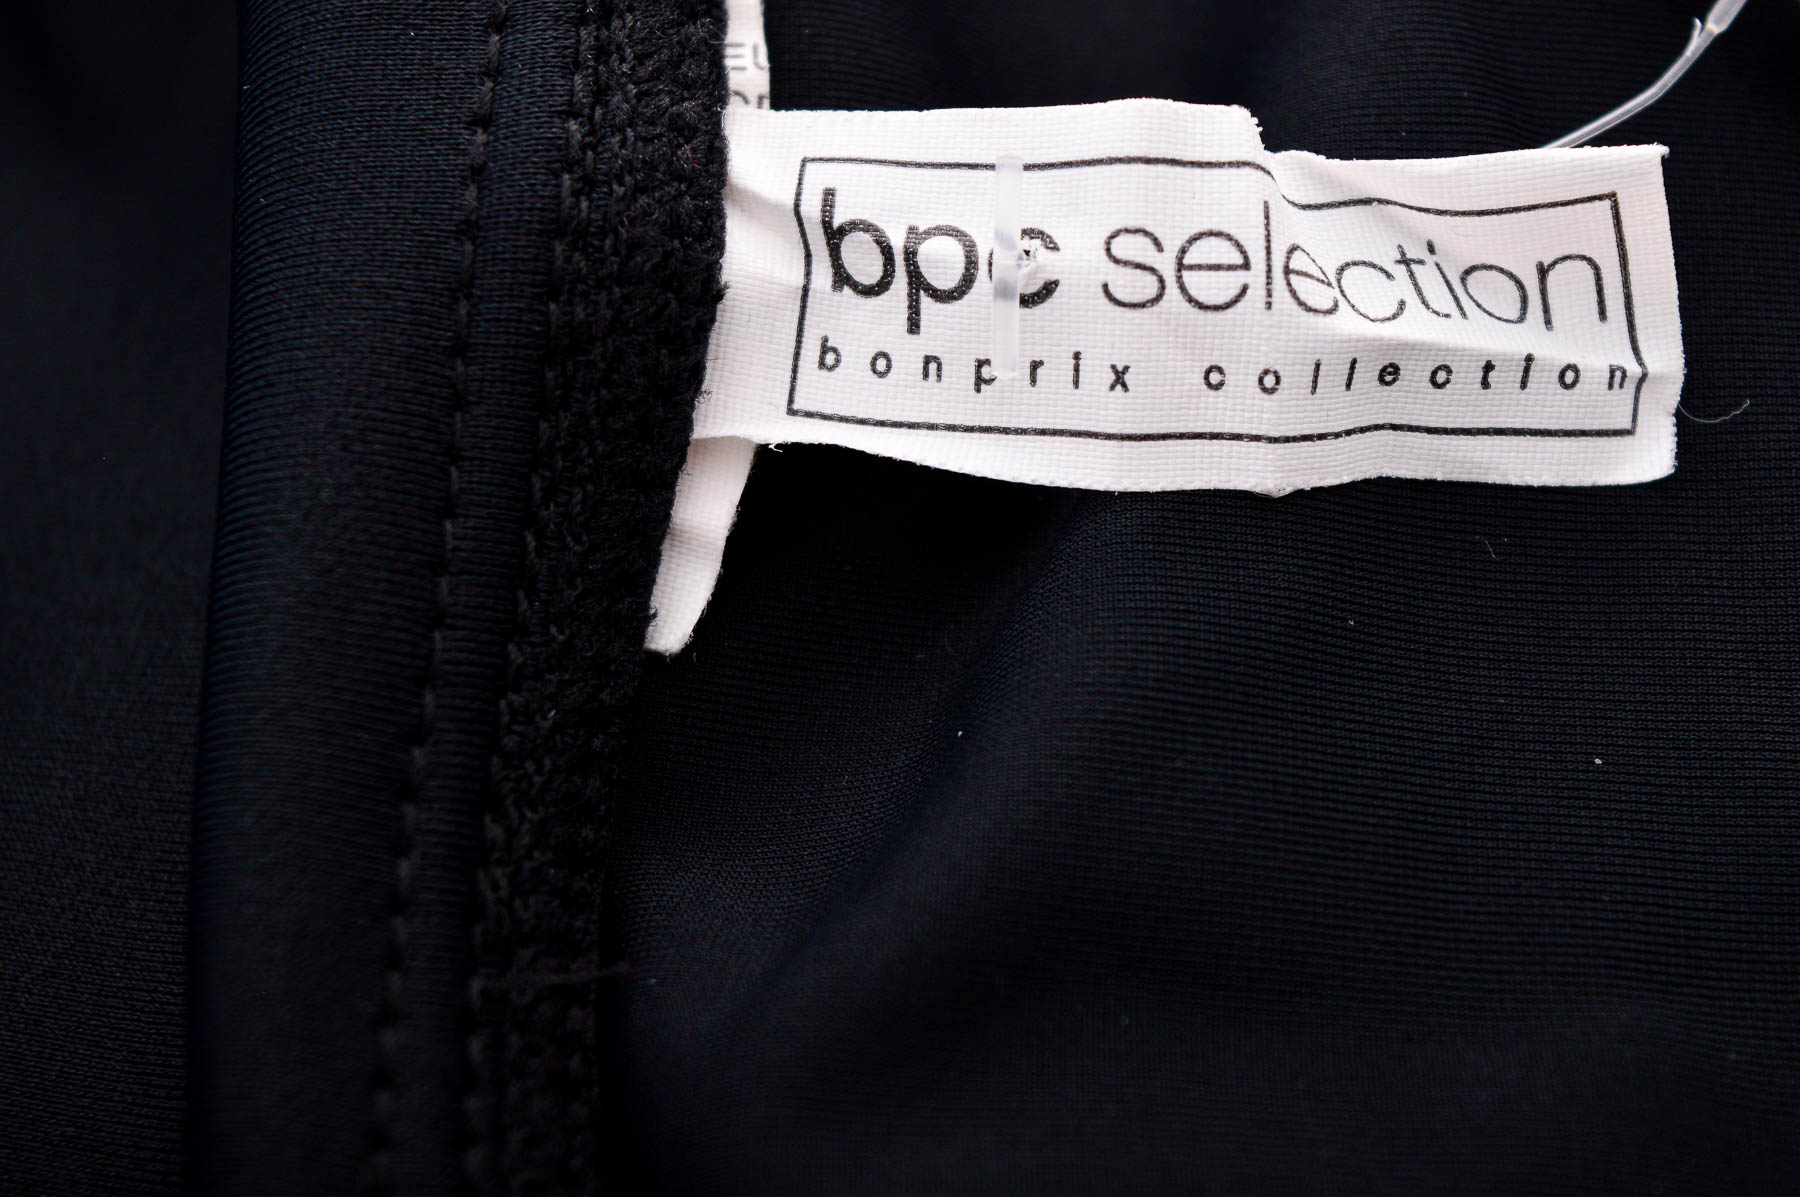 Spodnie spódnicowe - Bpc selection bonprix collection - 2